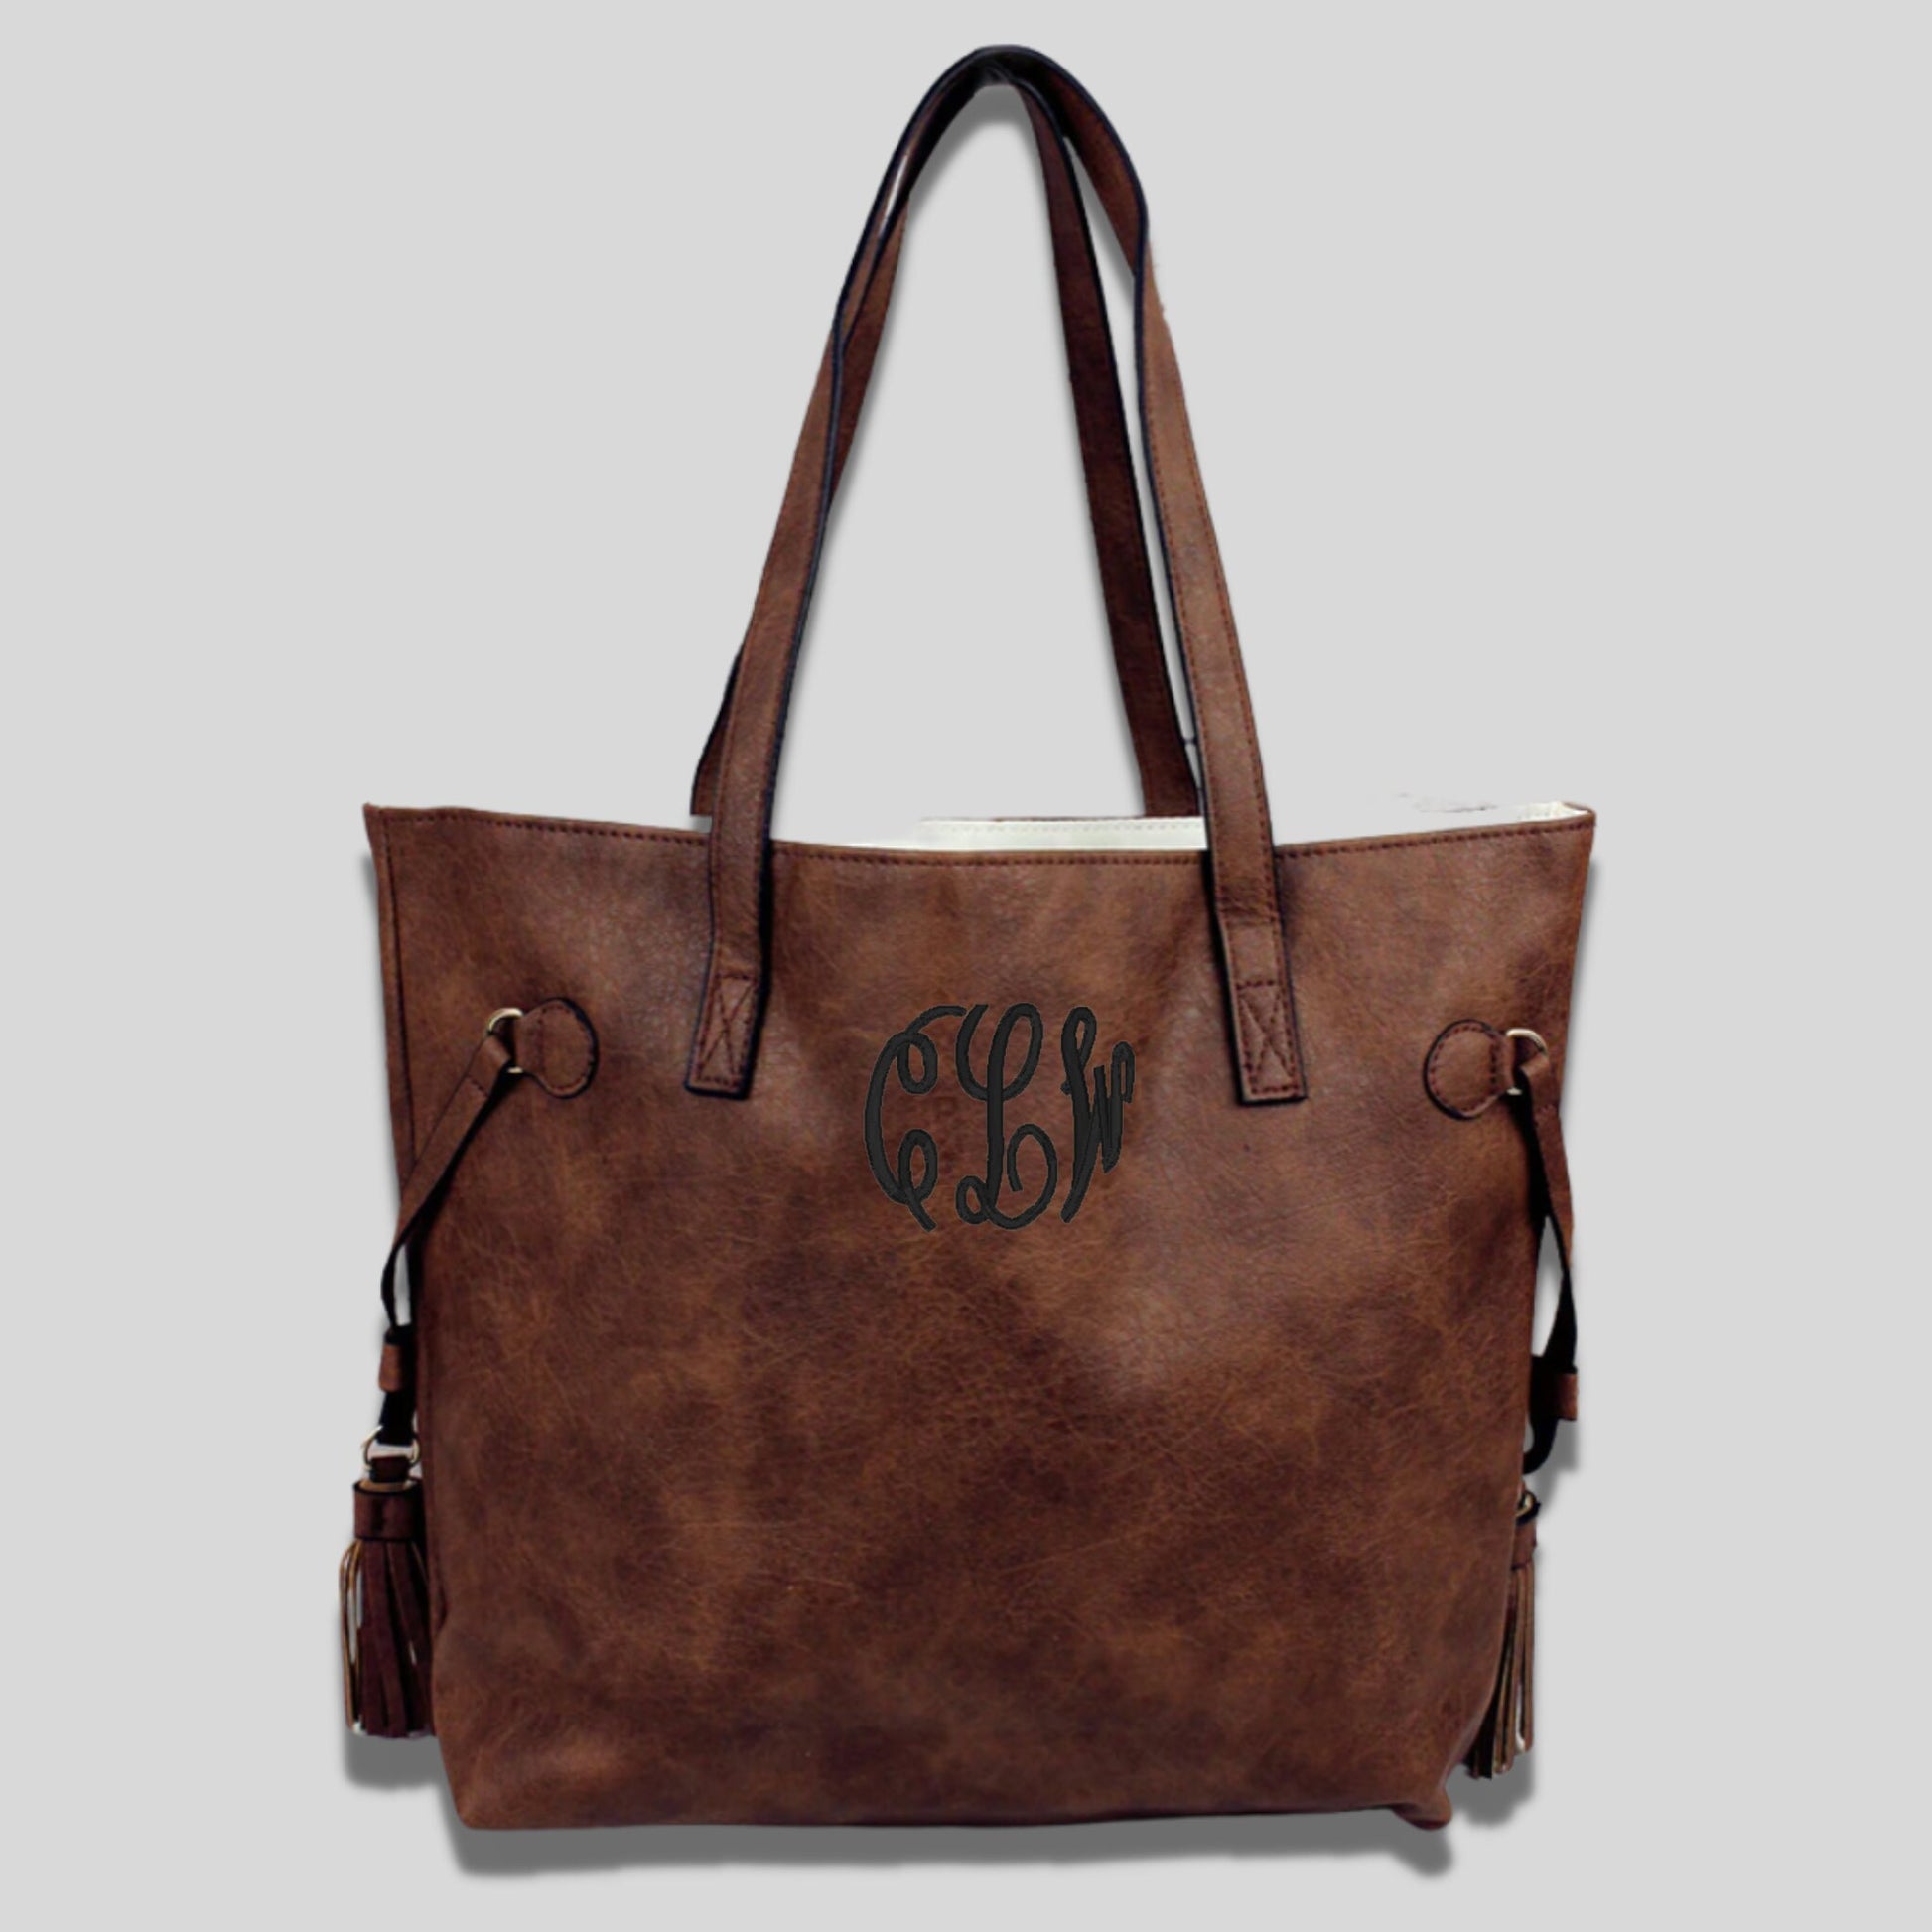 Women's Monogram Bags & purses